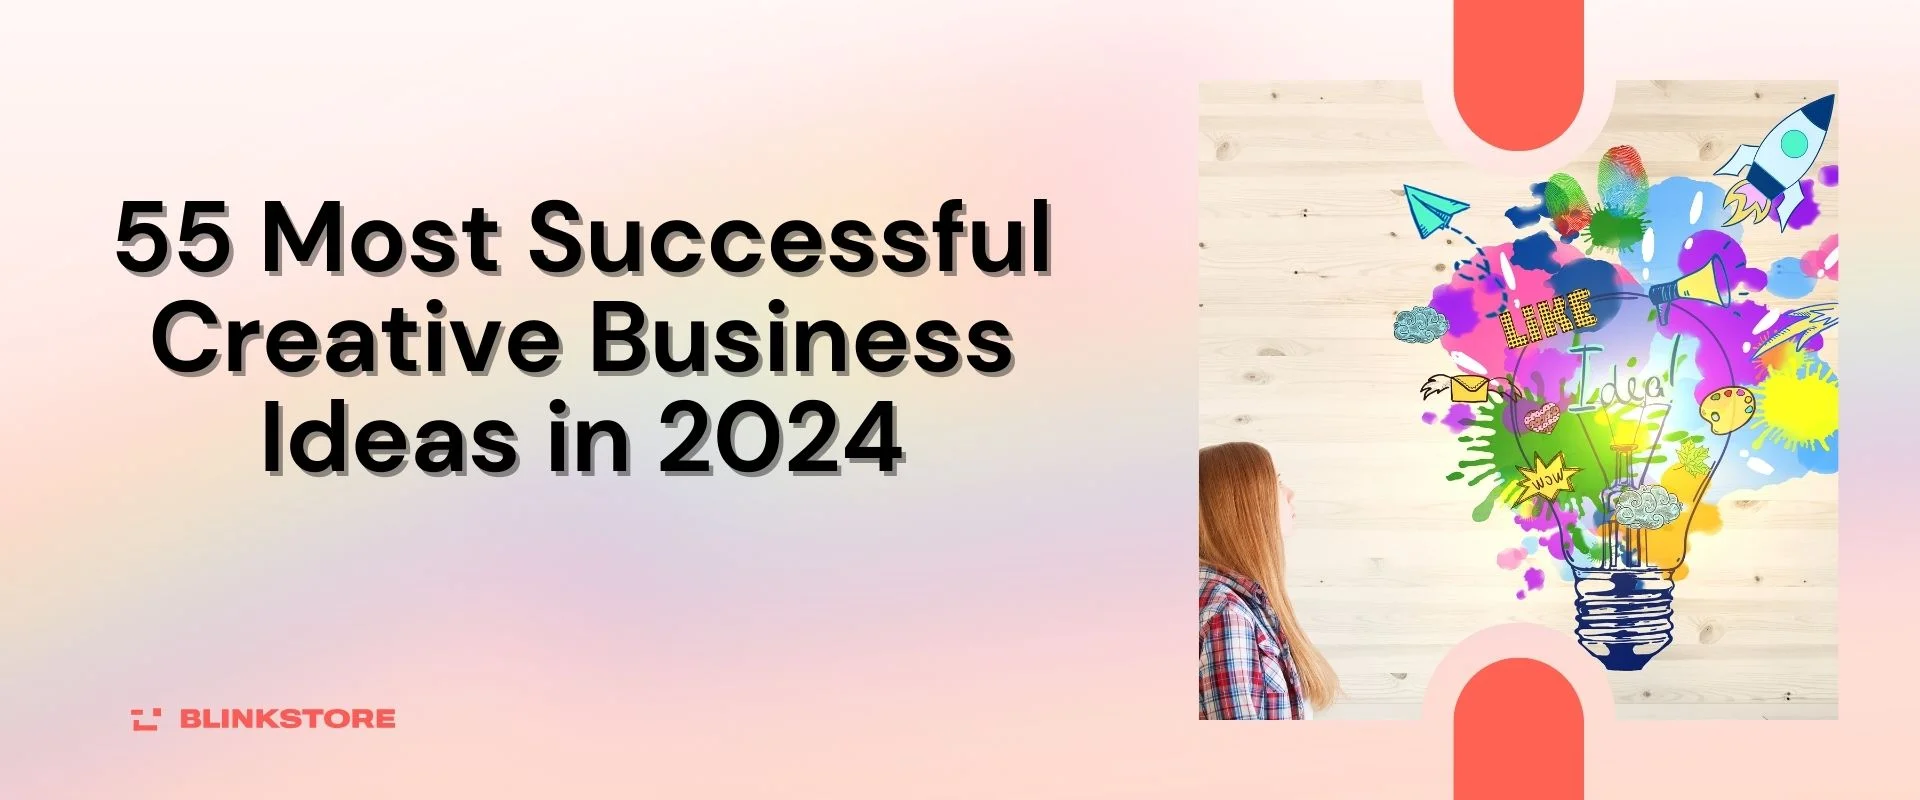 55 Most Successful Creative Business Ideas in 2024